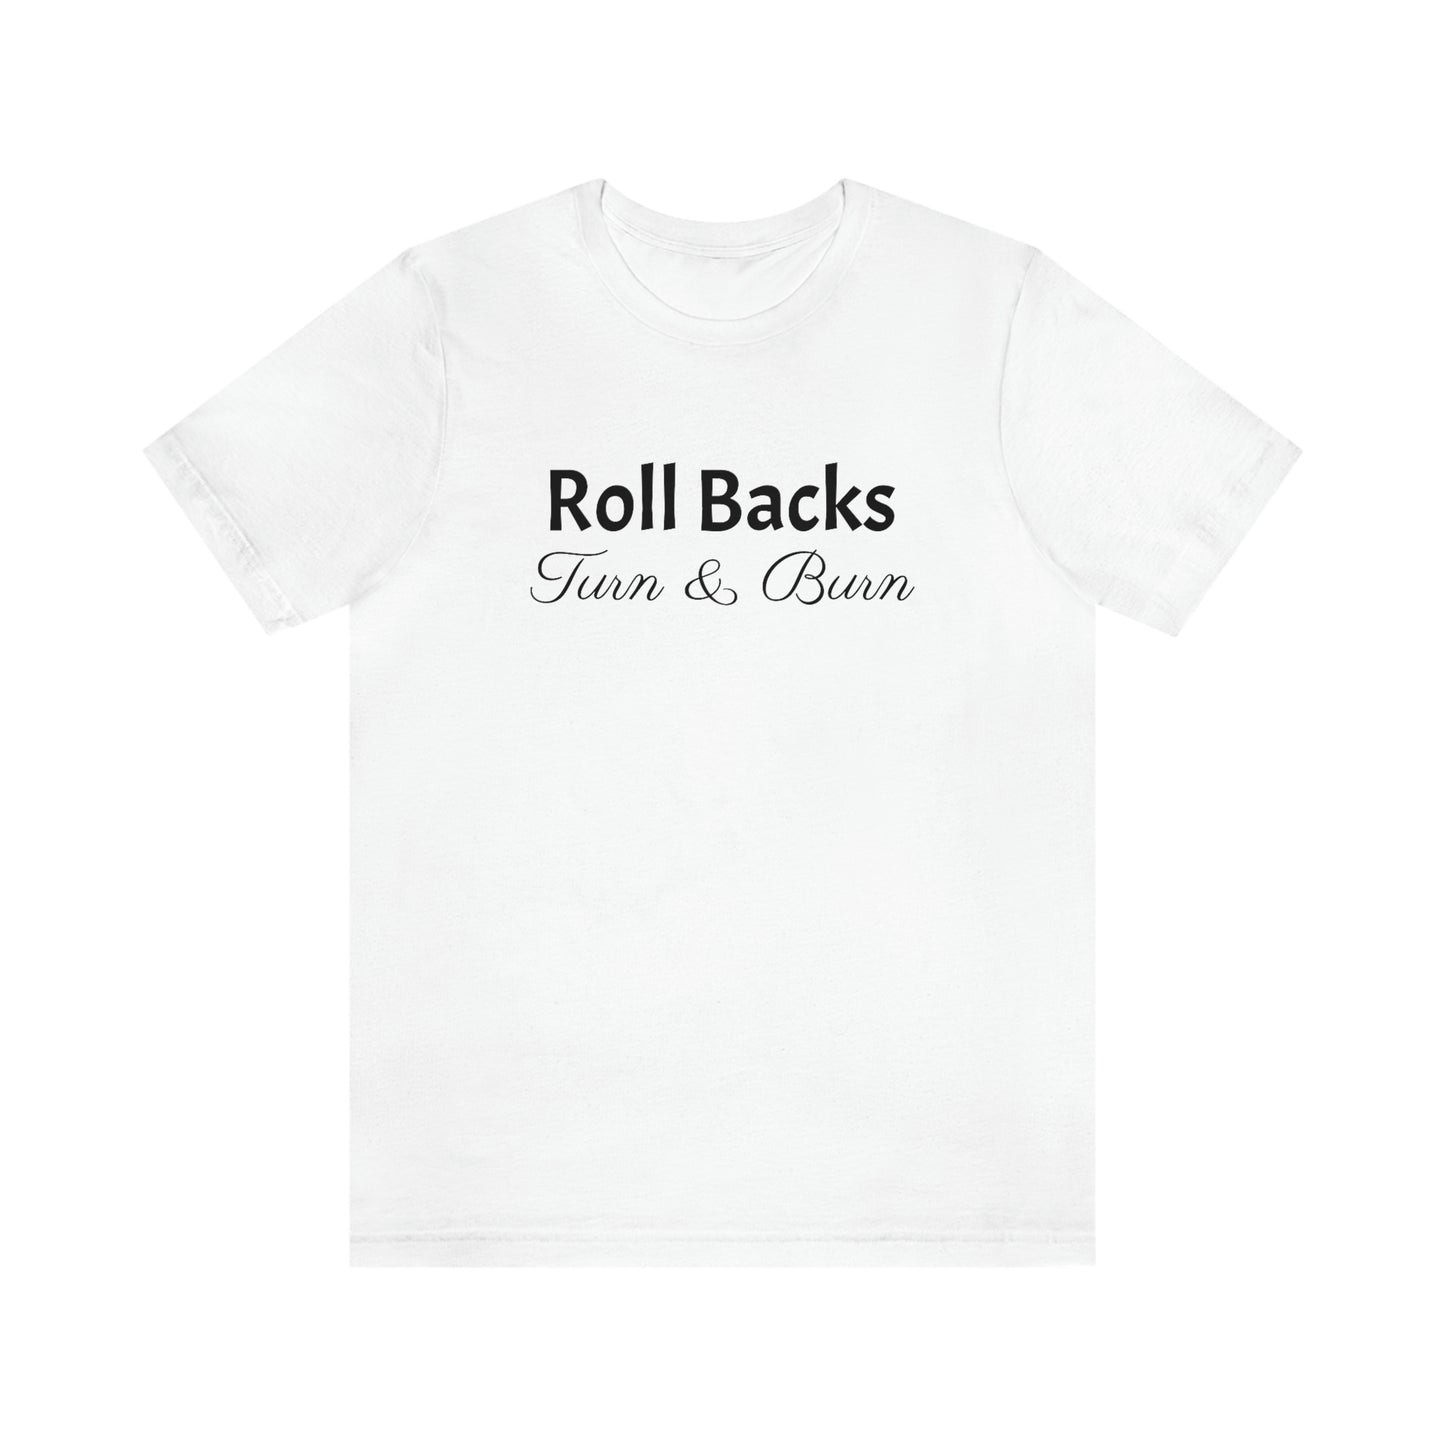 Shirt - Roll Backs, Turn & Burn